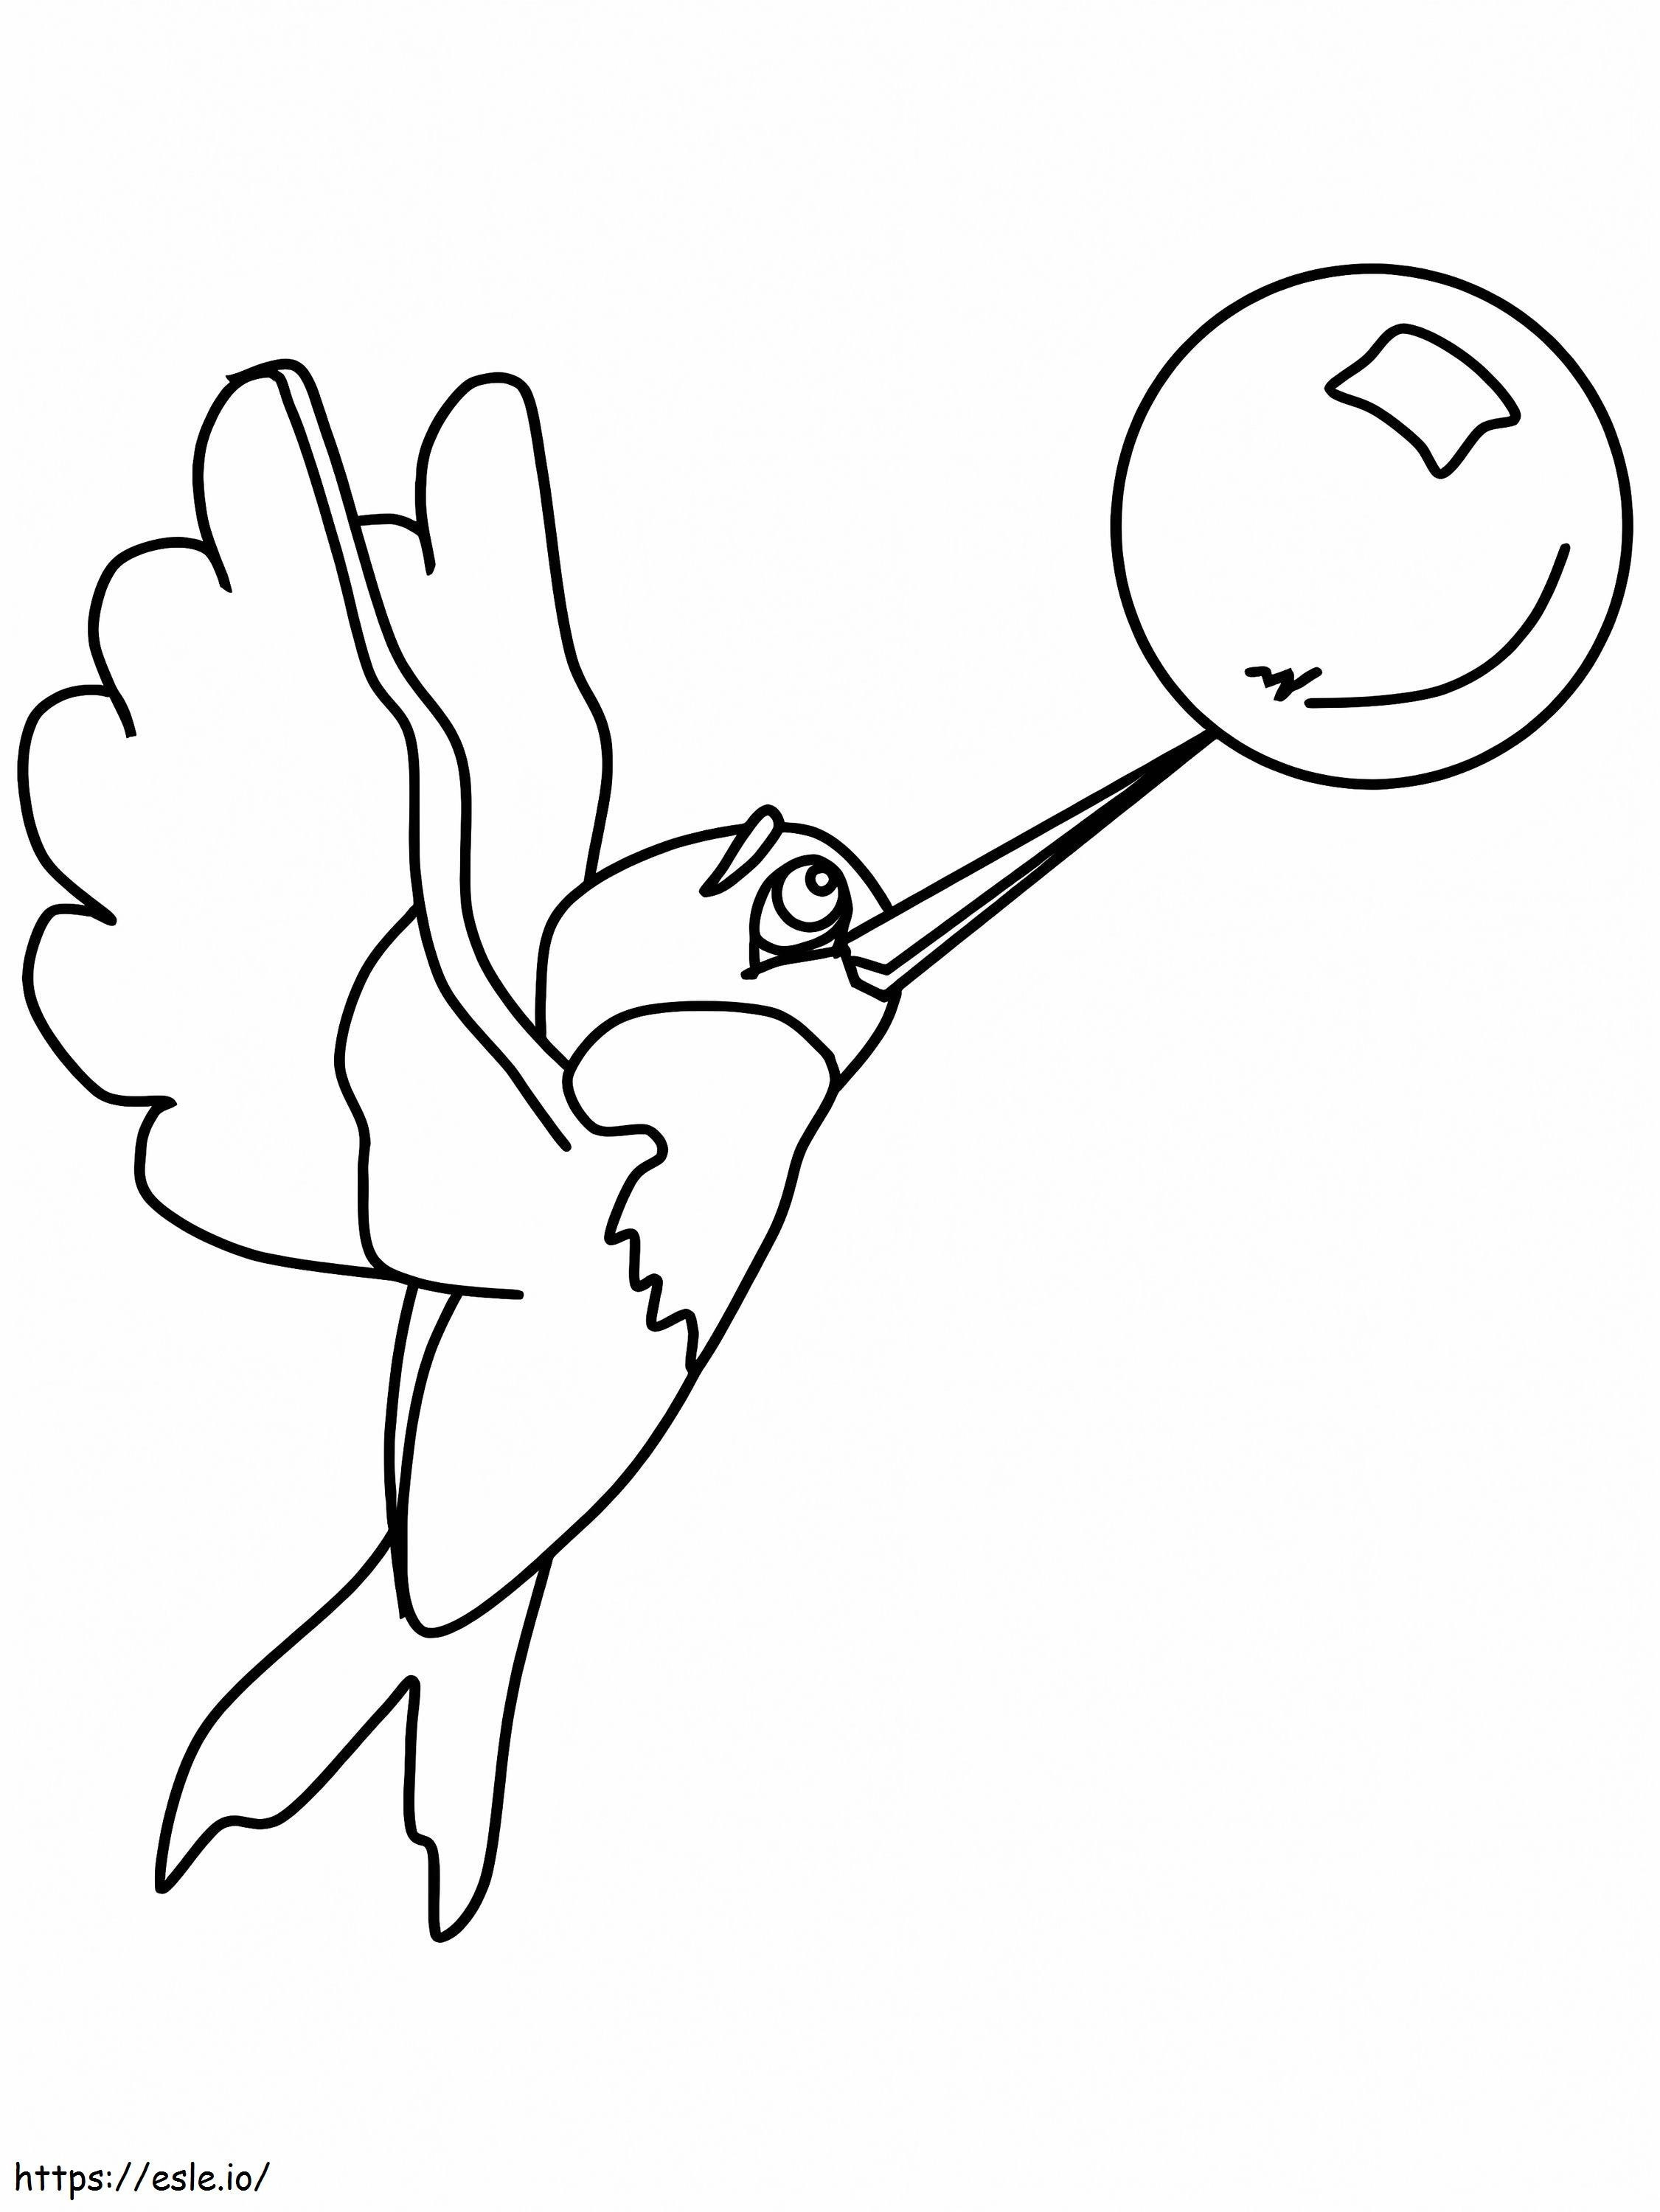 Kolibri mit Ball ausmalbilder